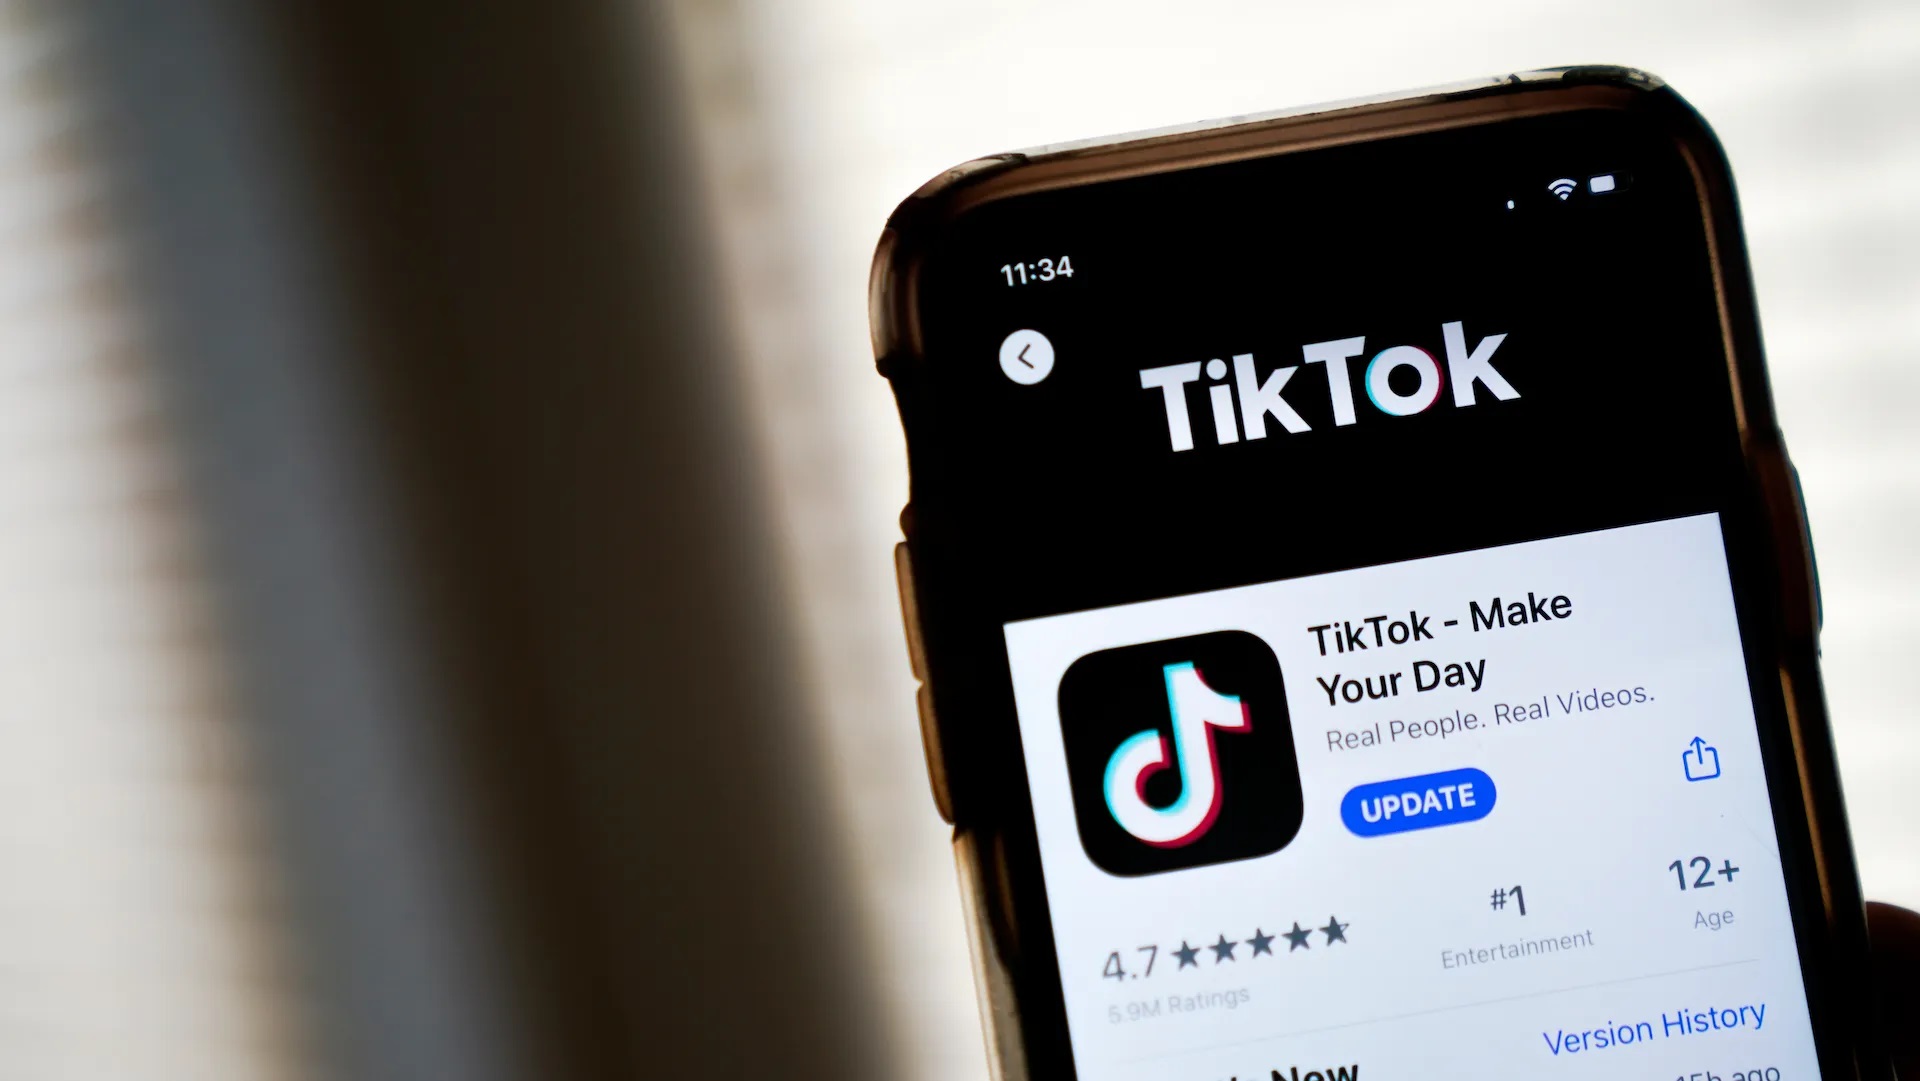 New Tool Hook Offers Legal Remixes For TikTok